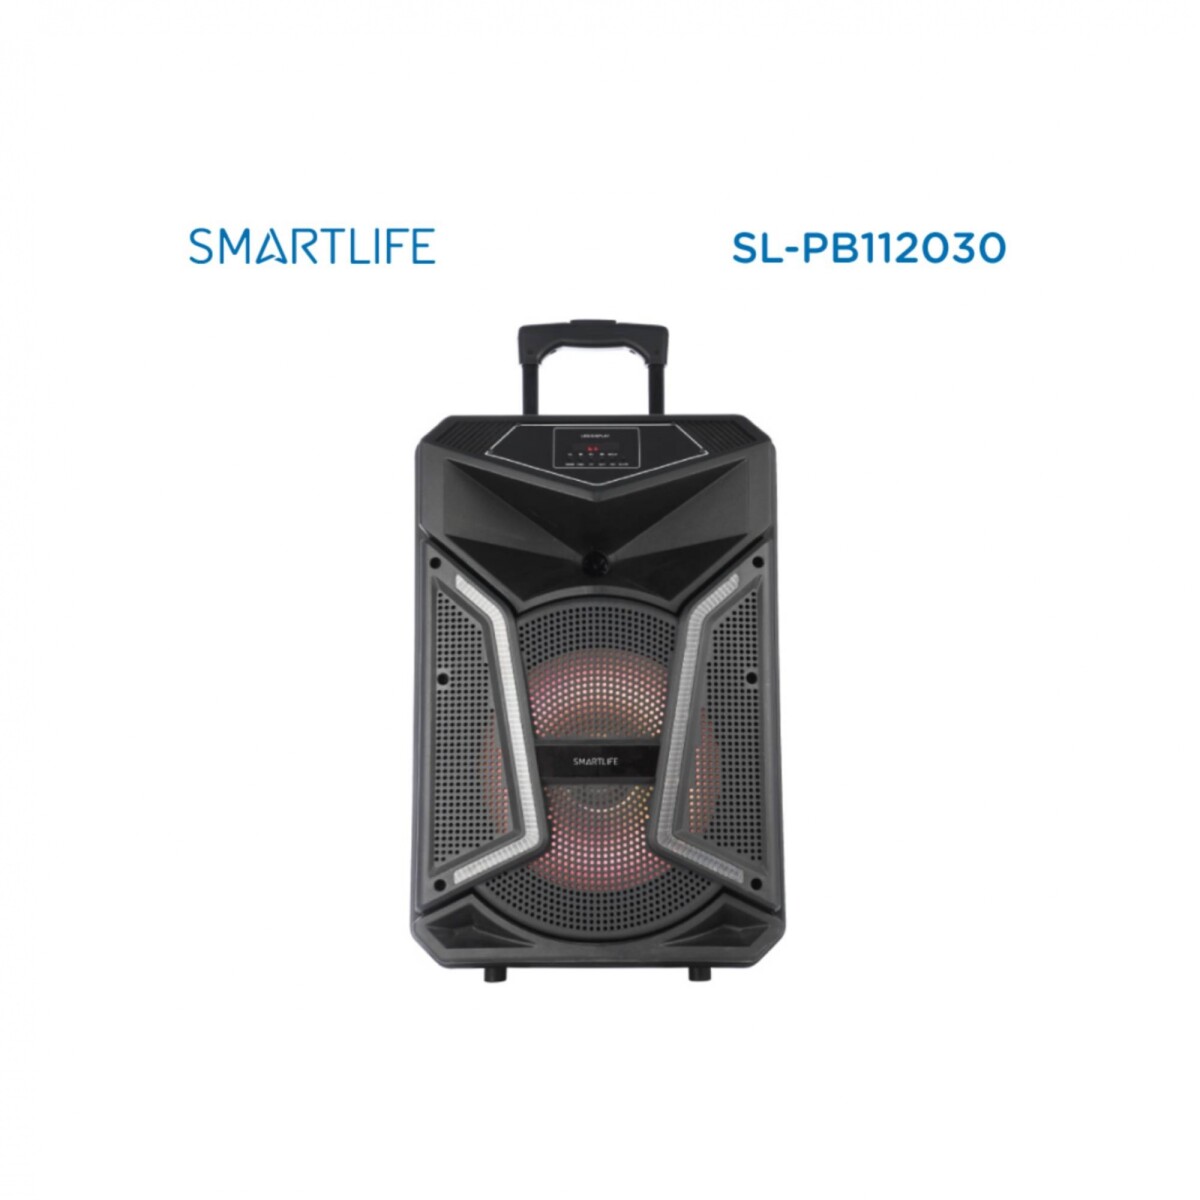 Parlante Party Box Smartlife SL-PB112030 30 W - Negro 